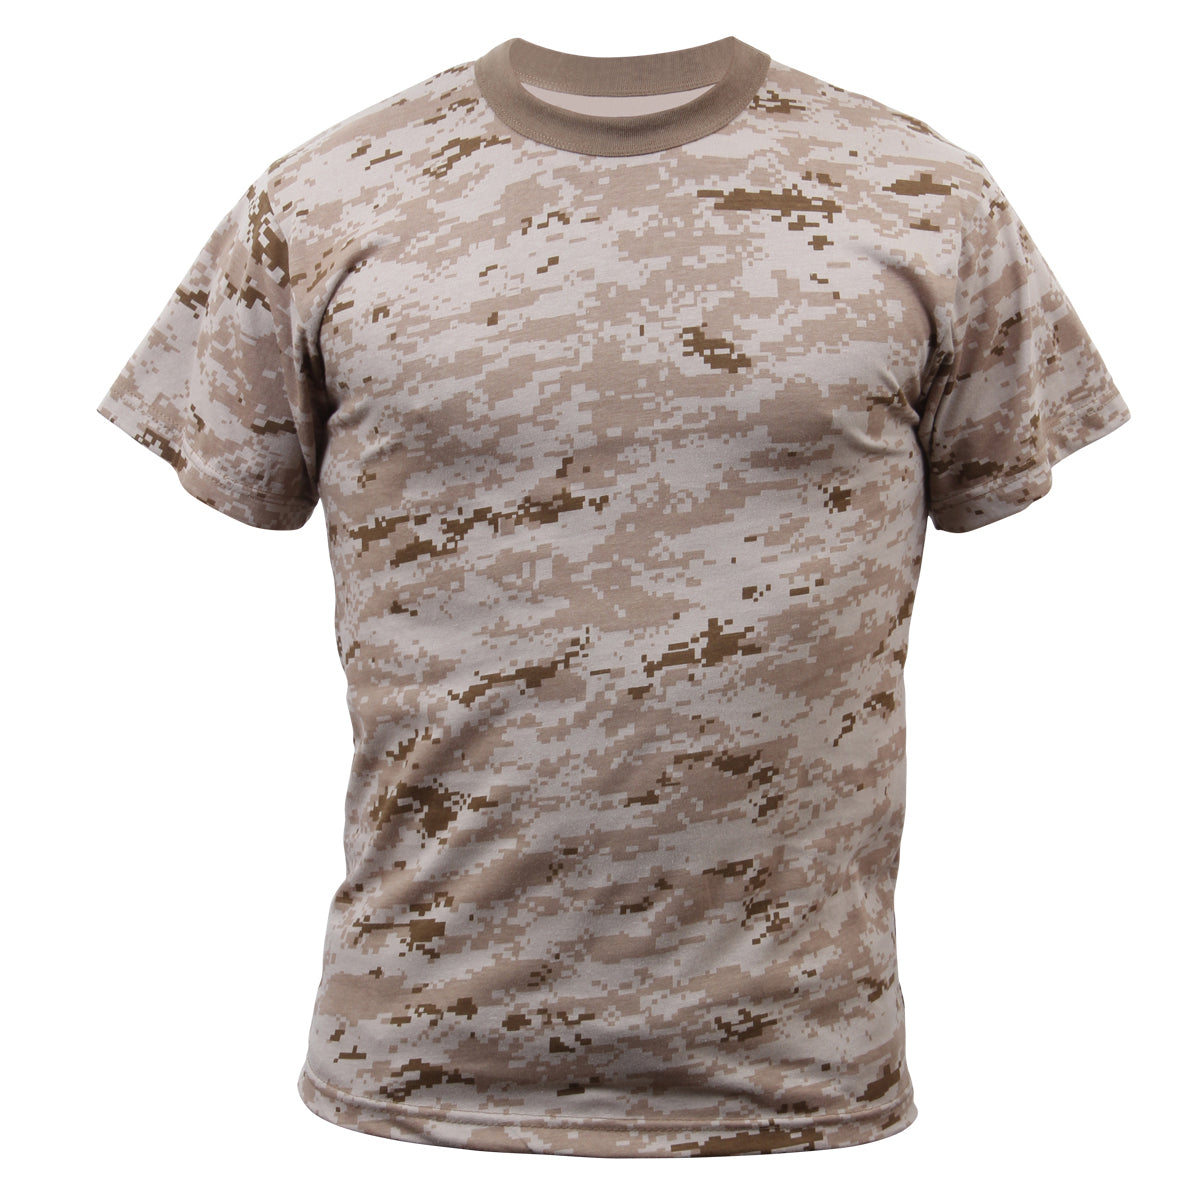 Rothco Camouflage T-Shirt Desert Digital Camo (5295)